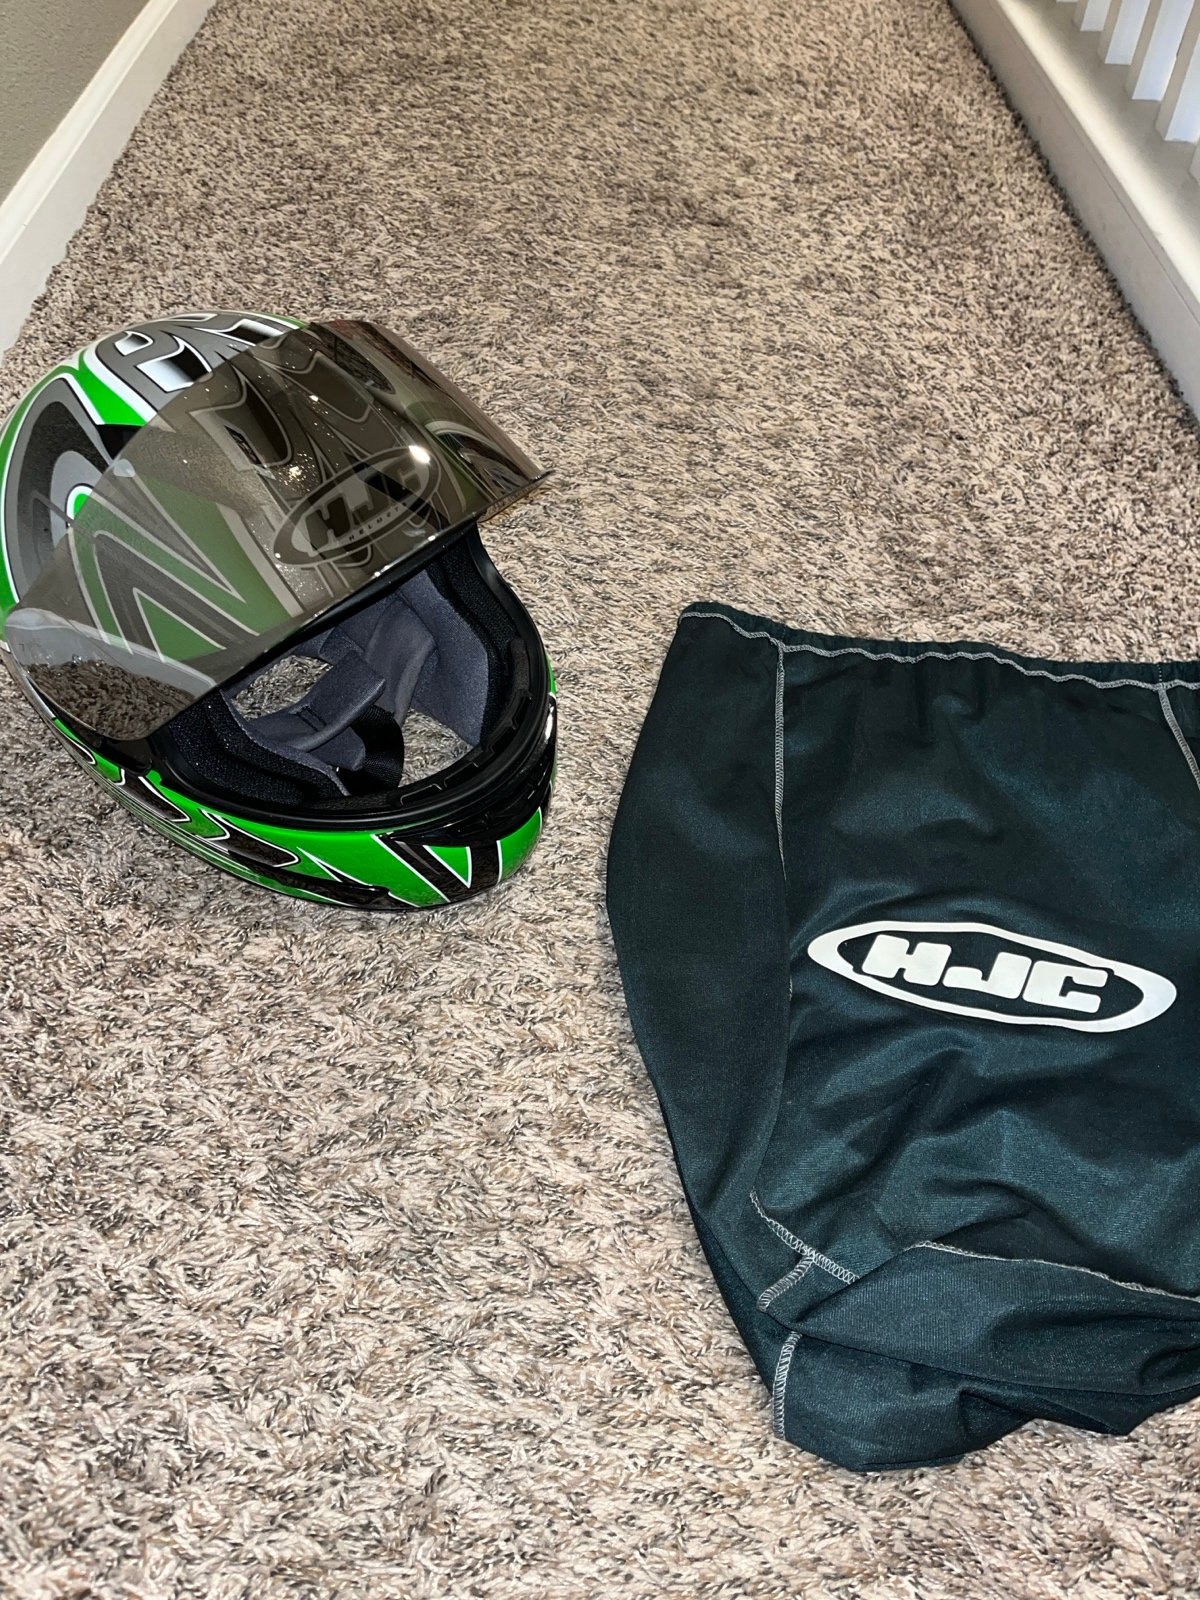 Hjc Motorcycle Helmet w/ drawstring case size medium (7 1/8 - 7 1/4) PaRMKYePl